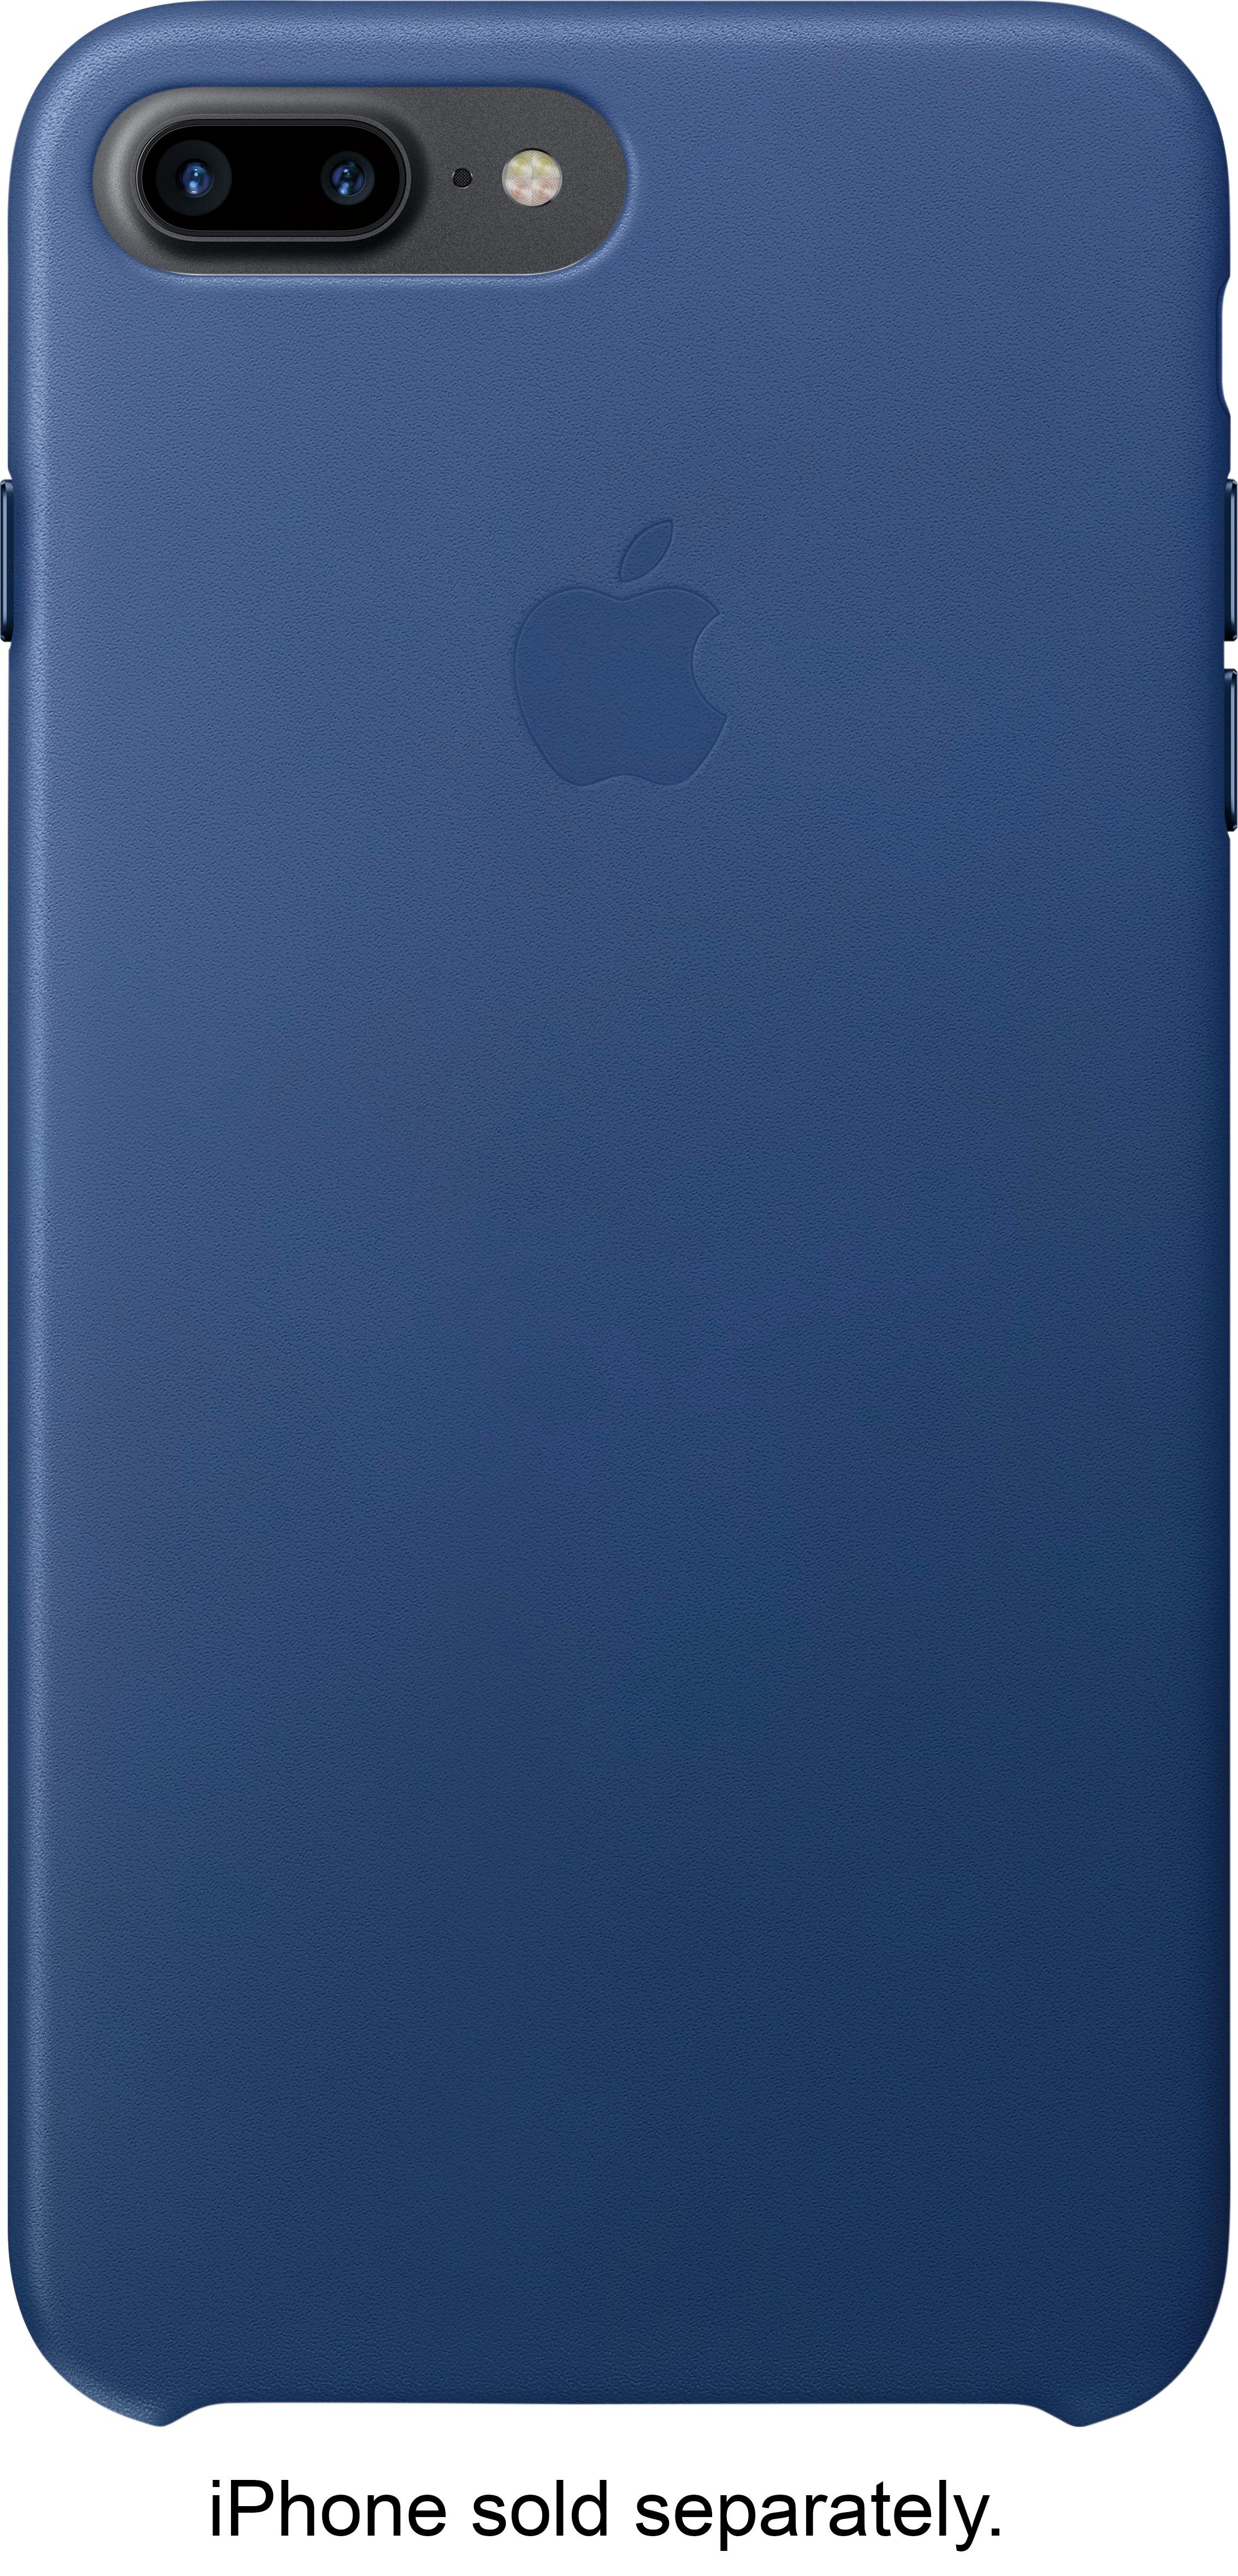 iPhone 7 Plus Cases - Buy iPhone 7 Plus Covers Online